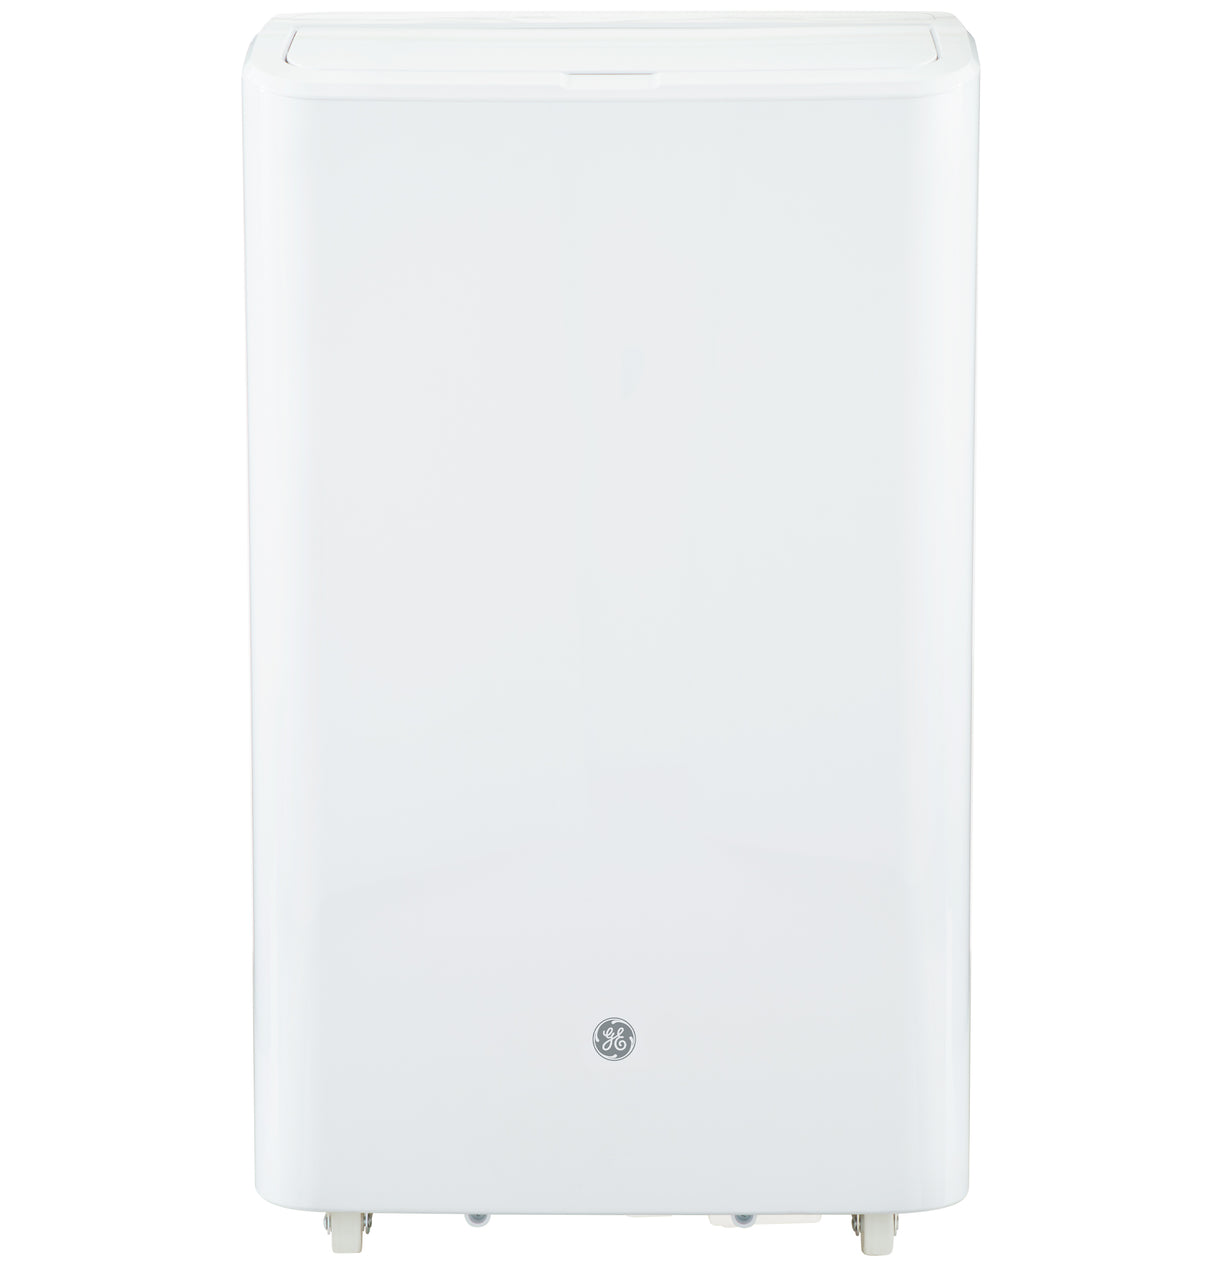 GE(R) 10,000 BTU Portable Air Conditioner for Medium Rooms up to 350 sq ft. (7,200 BTU SACC) - (APCA10YBMW)